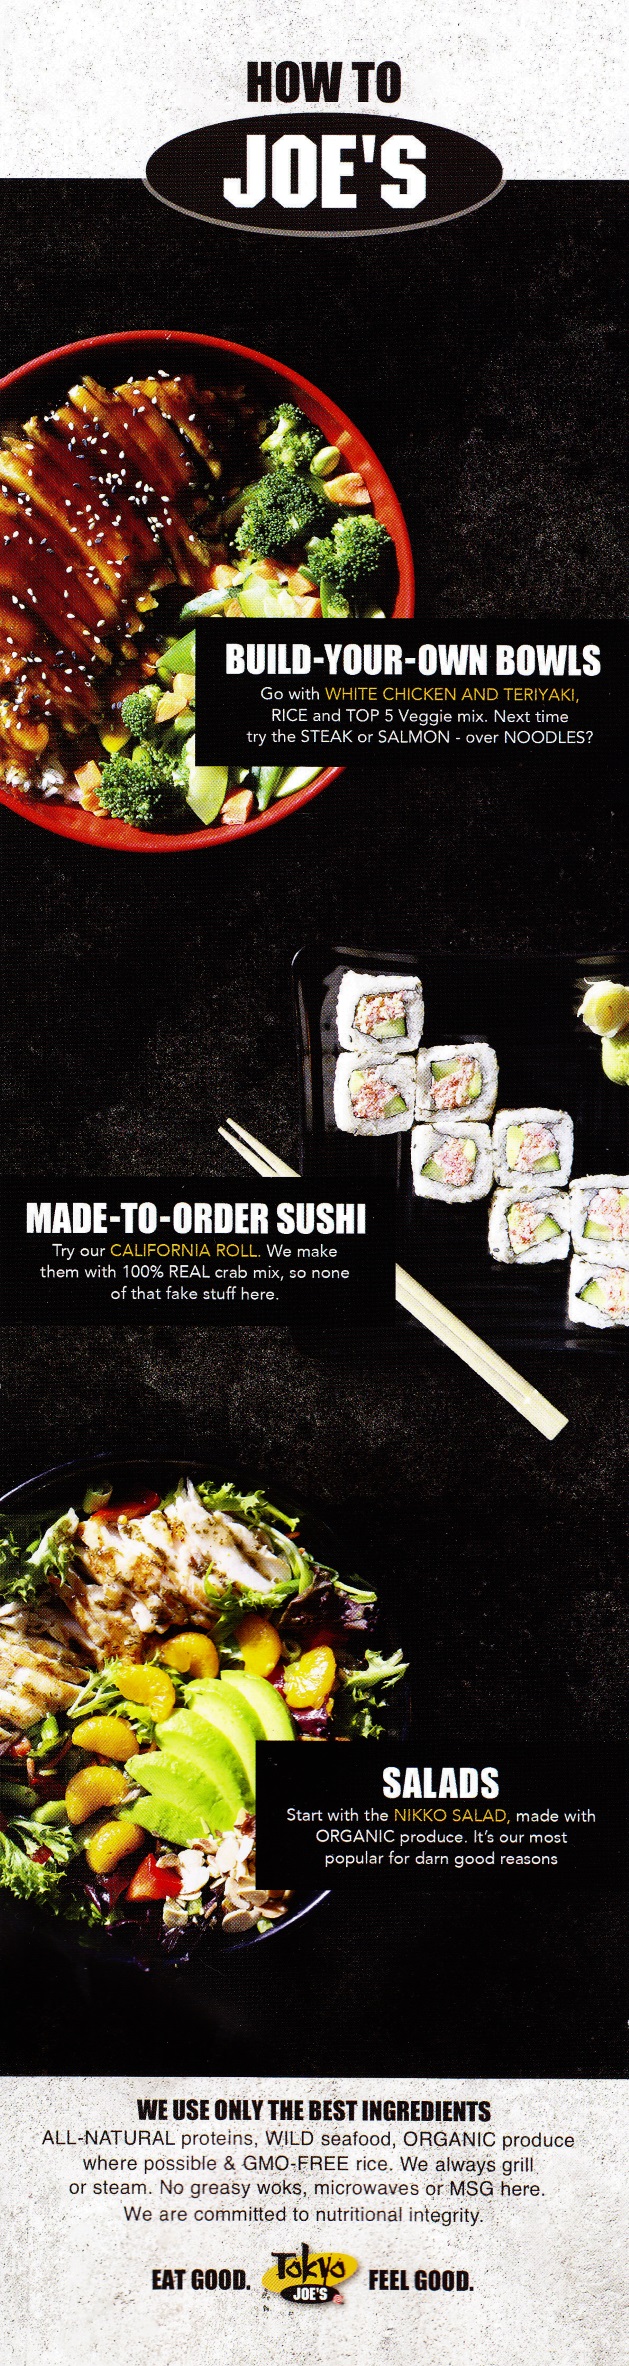 Sushi, Asian fusion 3